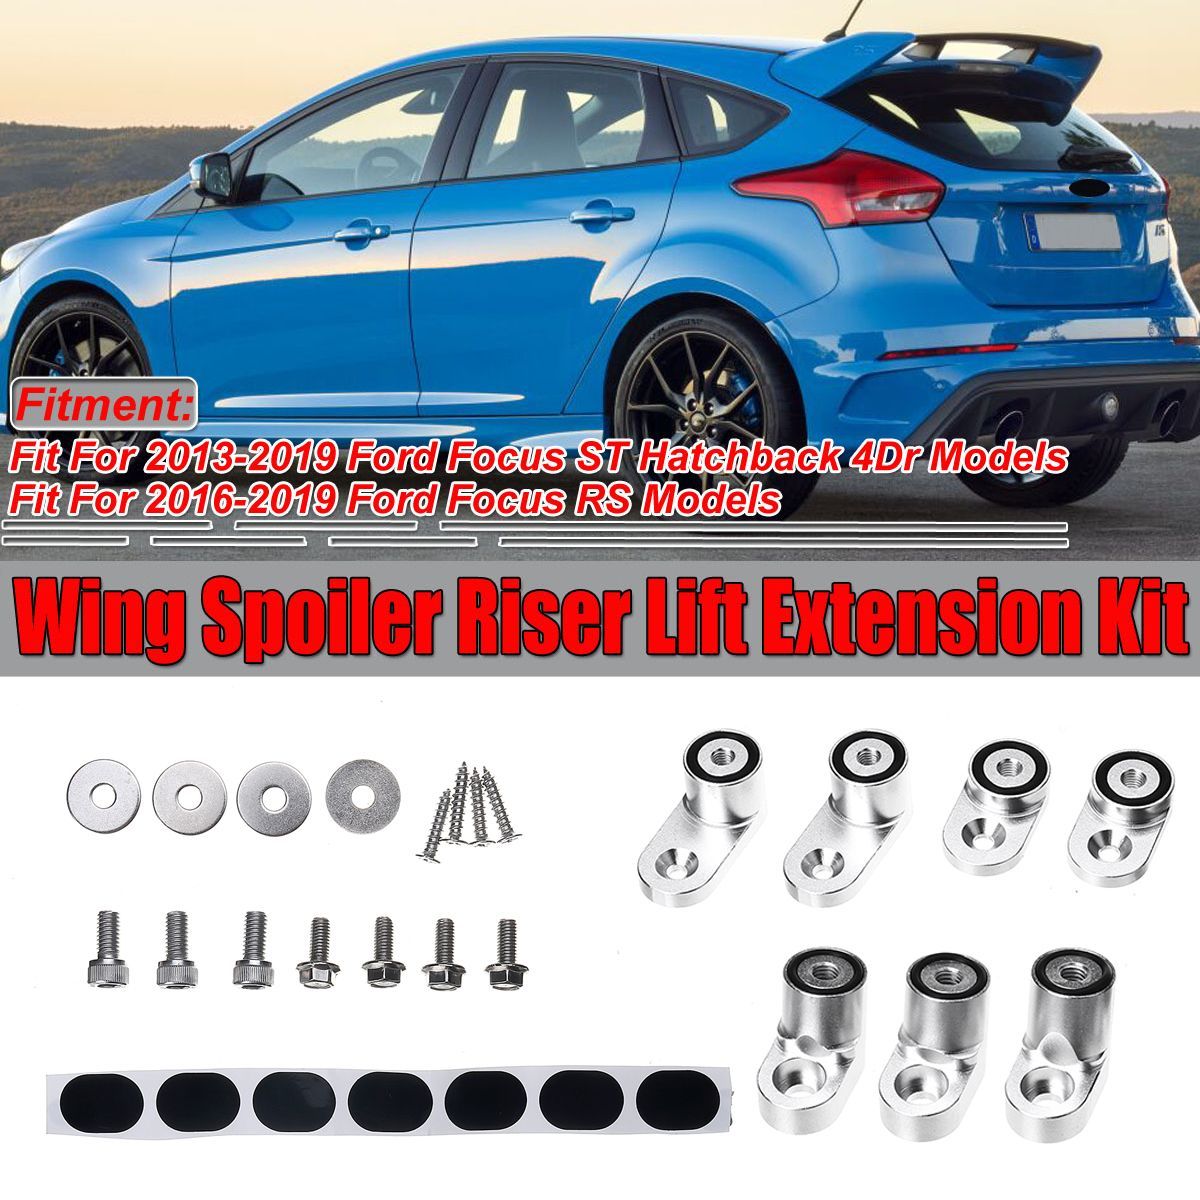 Car-Silver-Rear-Wing-Spoiler-Riser-Lift-Extension-Kit-For-Ford-Focus-ST-RS-Hatchback-4Dr-2013-2019-1684189